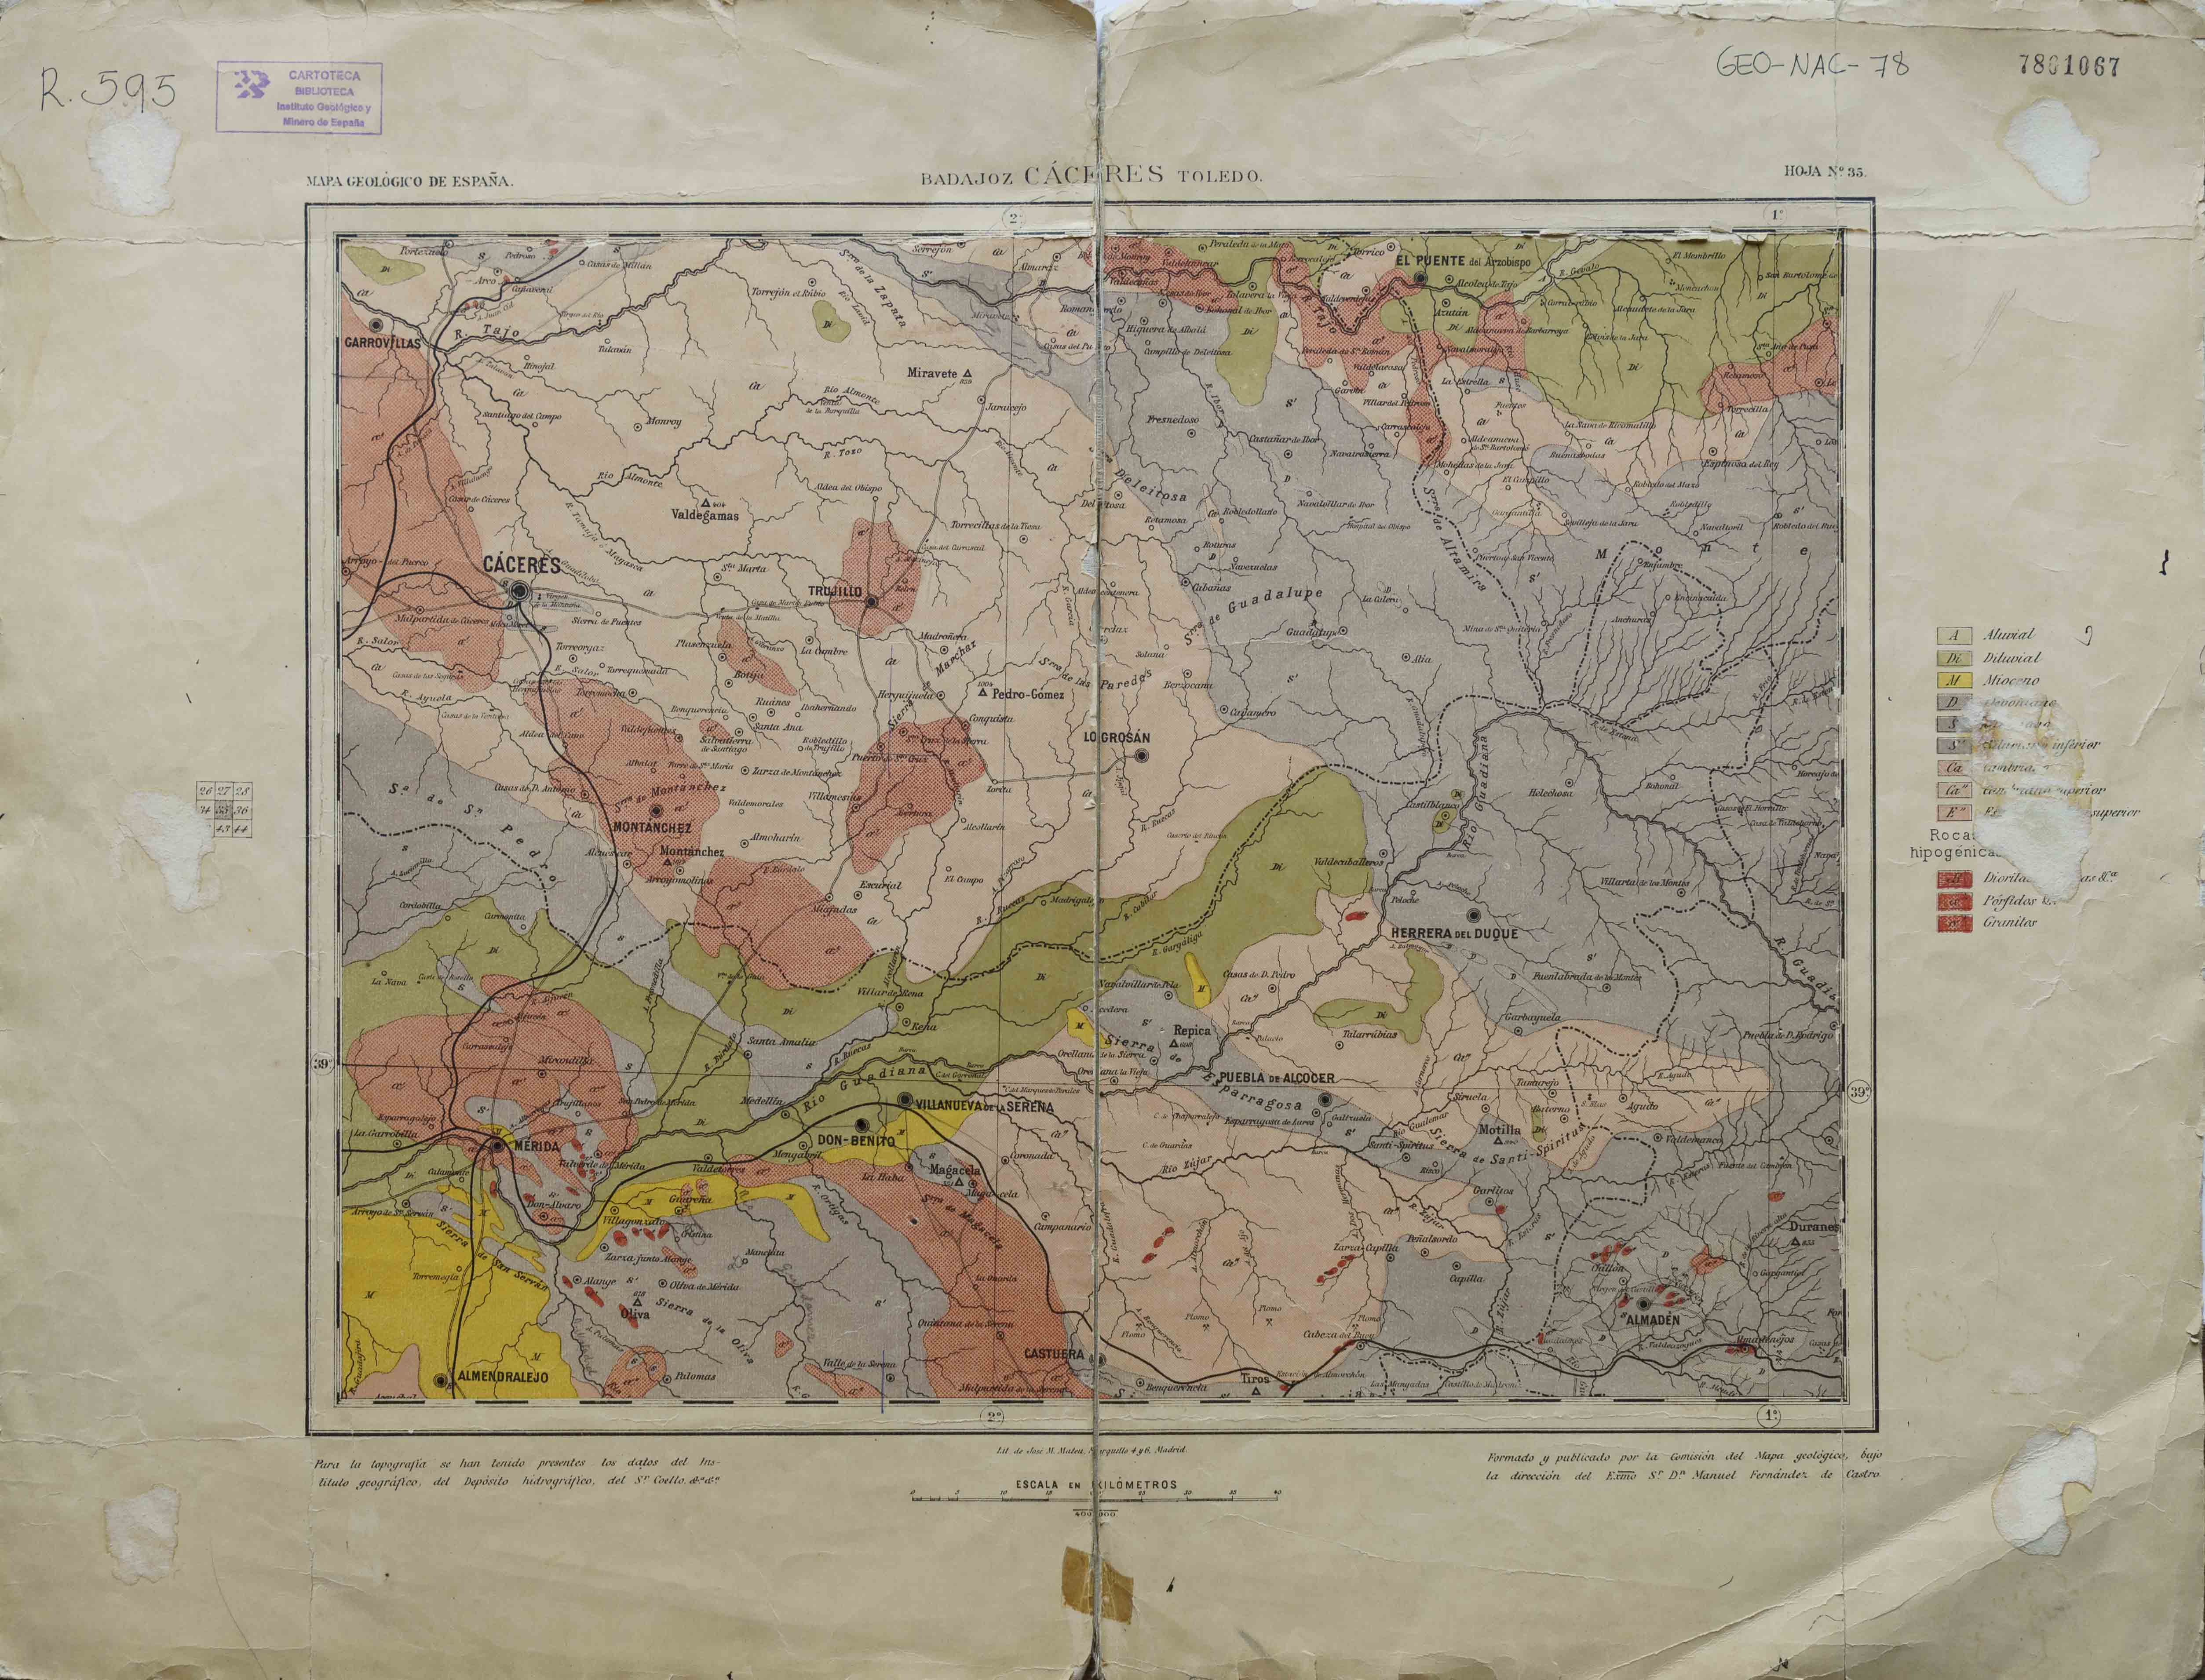 Mapa geológico de España : Cáceres, Badajoz, Toledo : hoja nº 35